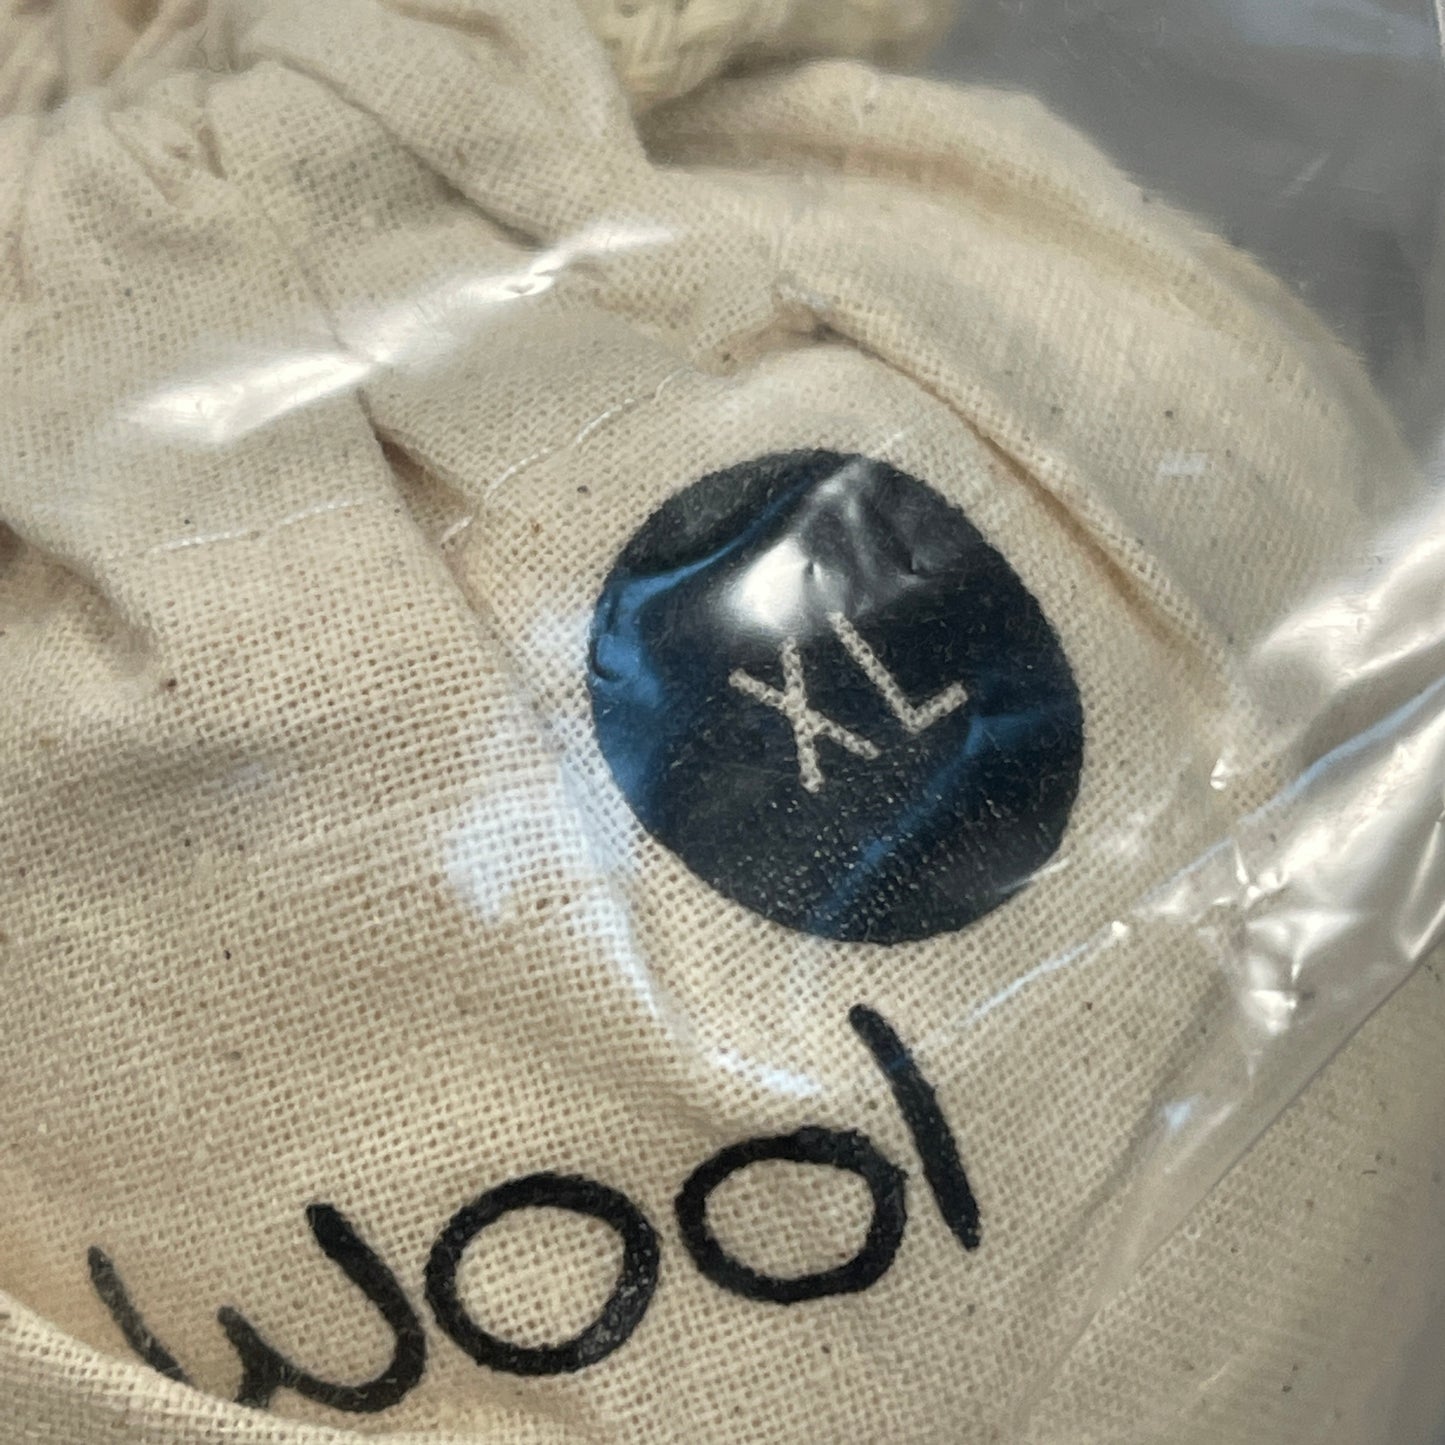 ECOIGY Handmade Wool Dryer Balls 100% New Zealand Wool Set of 6 White XL (New)